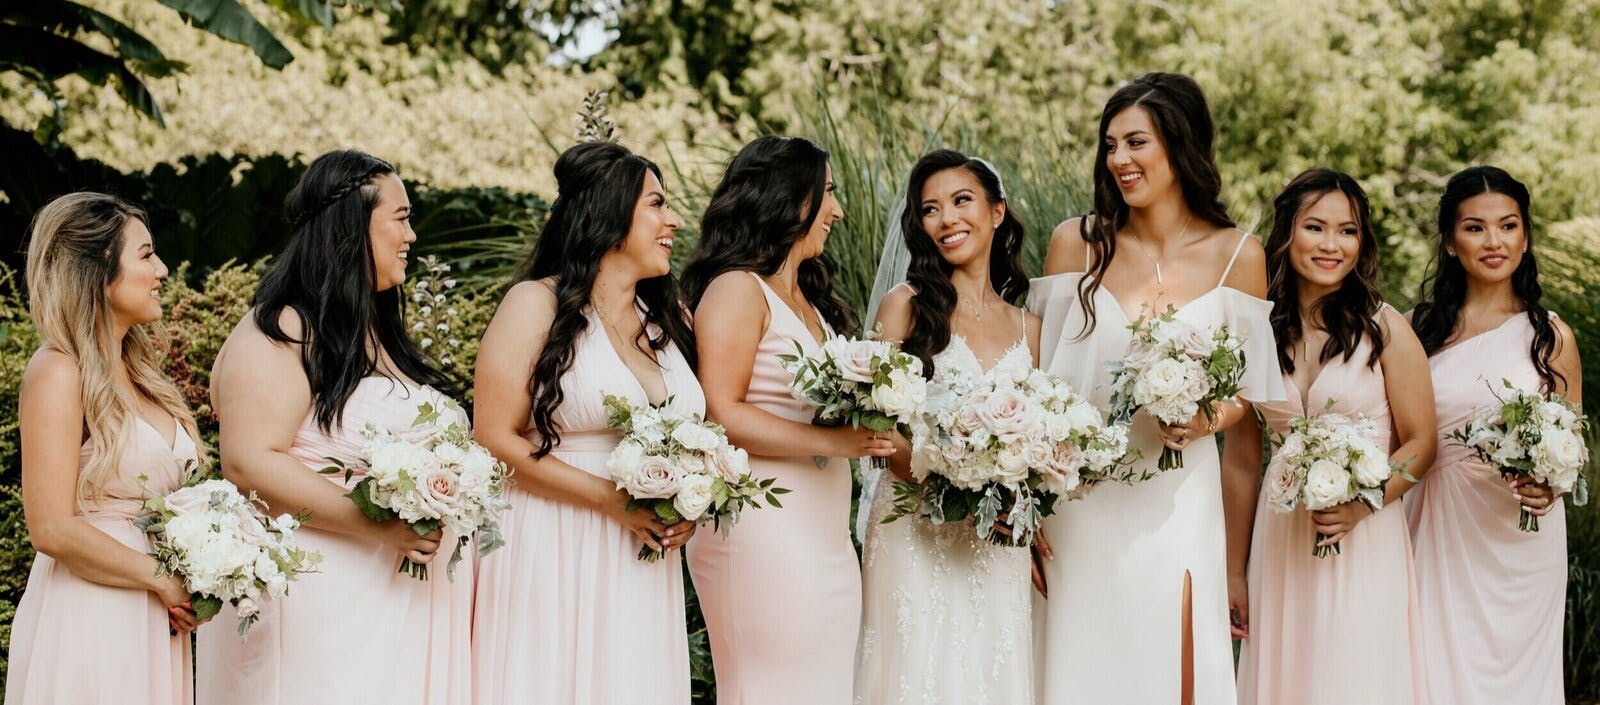 Cassandra with bridesmaids